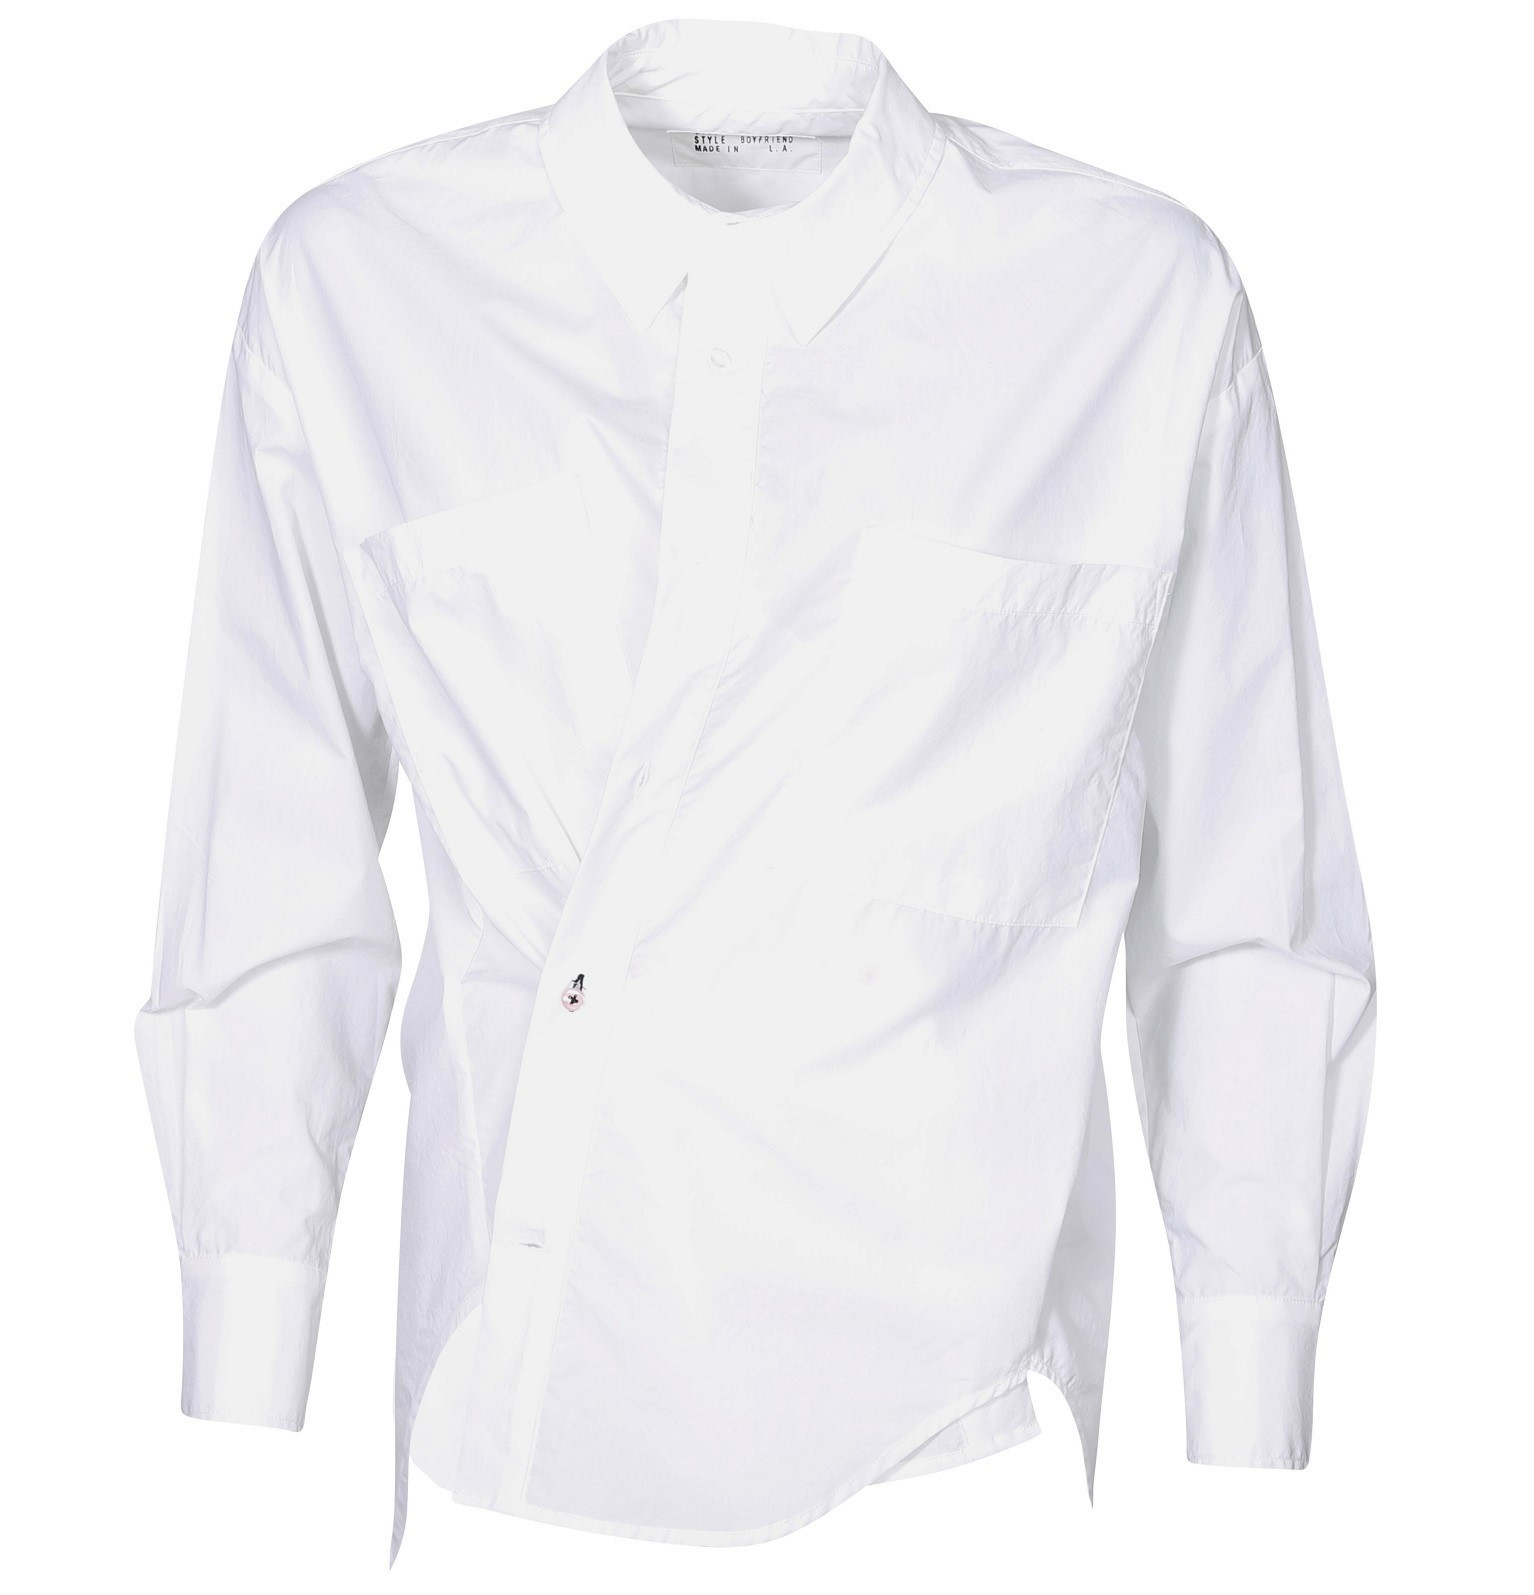 WEARCISCO The Boyfriend Shirt in White XS/S